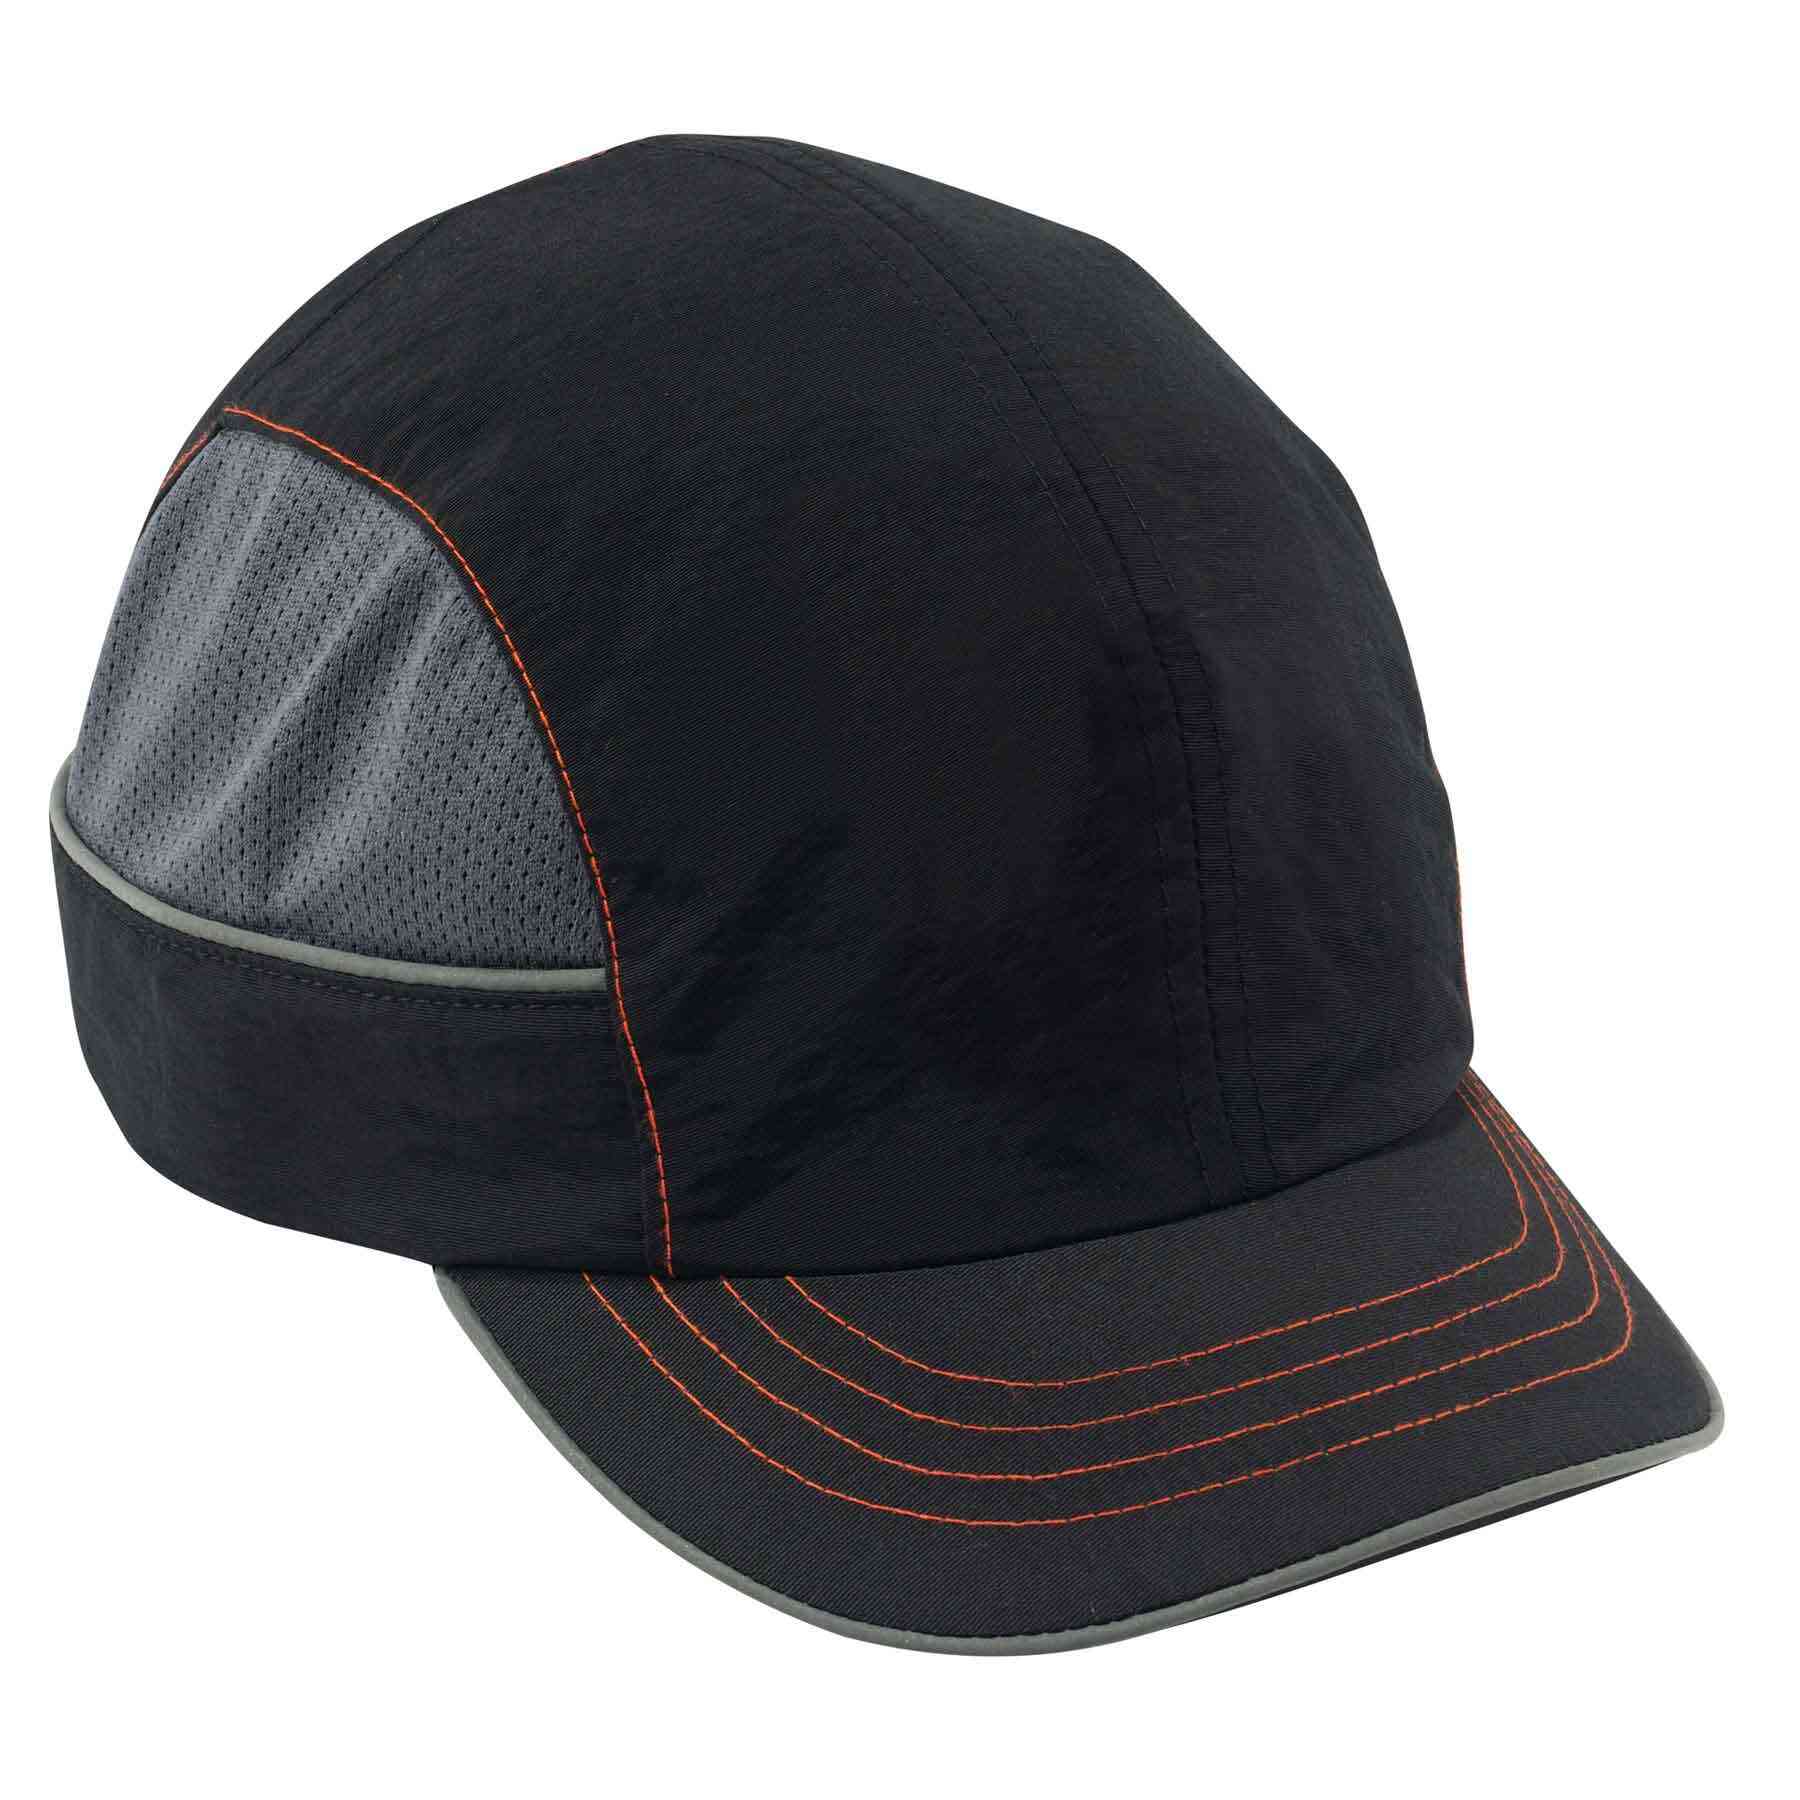 XL Bump Cap Hat - Baseball/Bump Caps